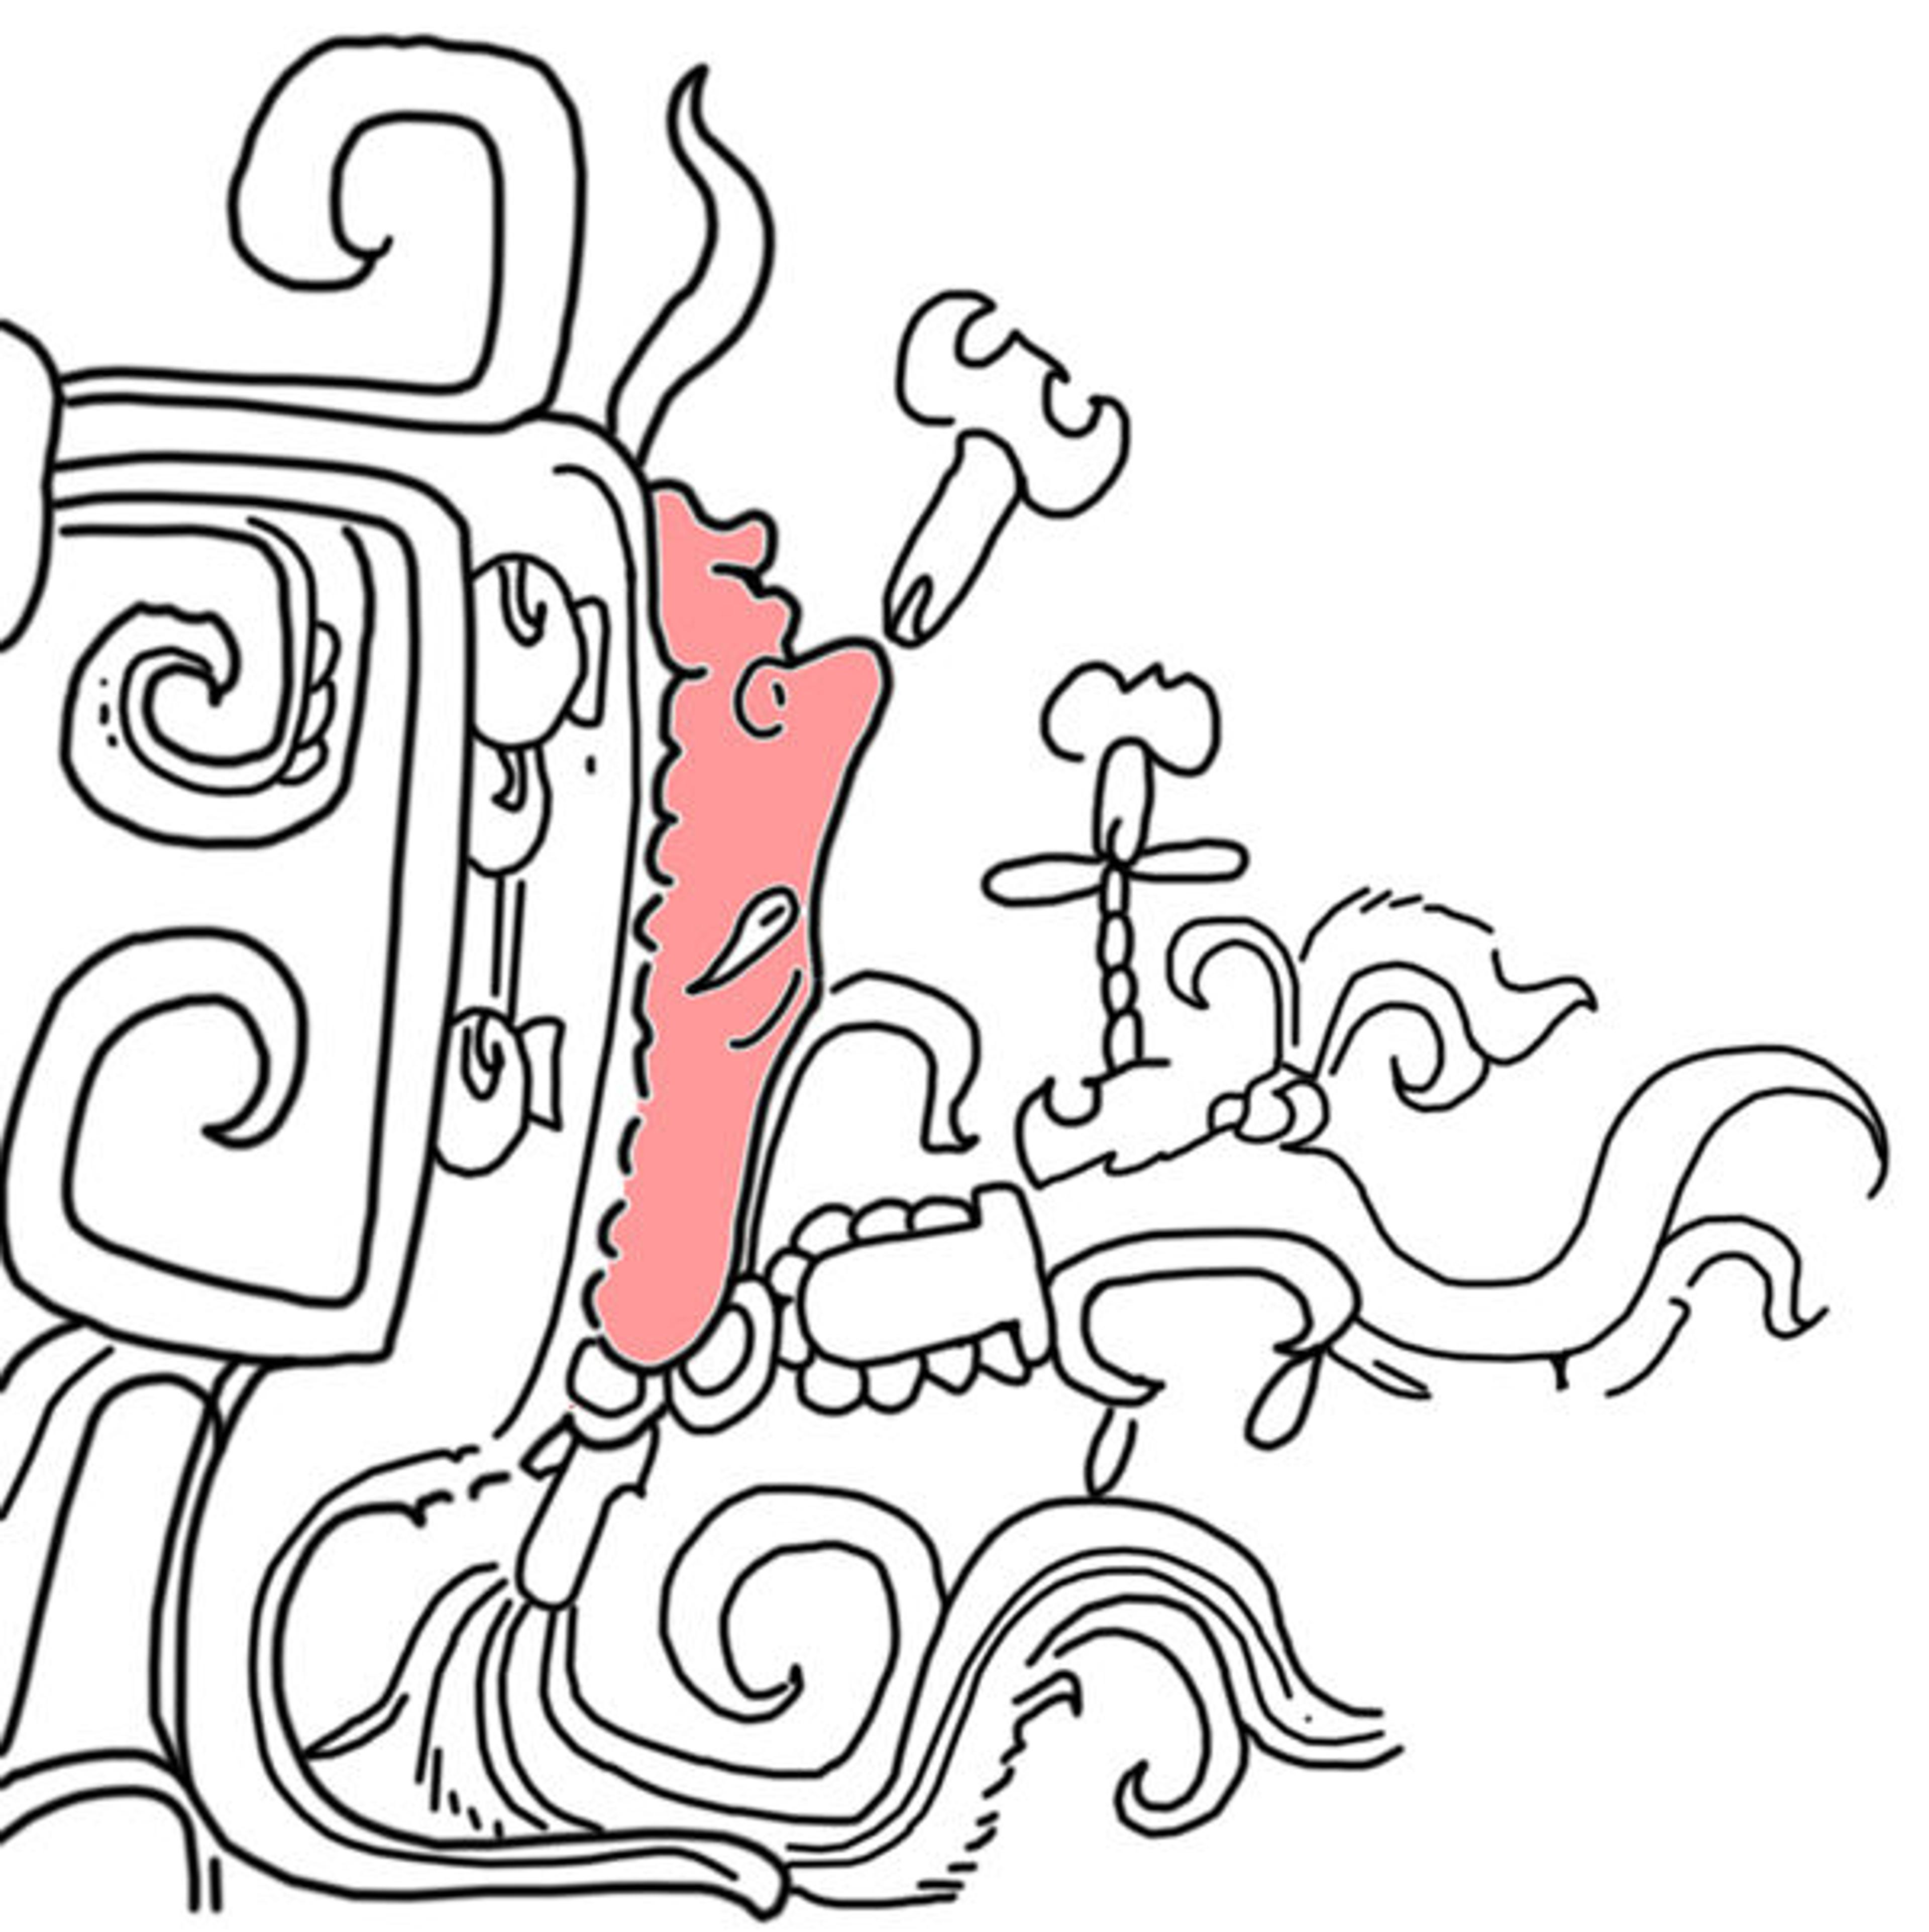 Maya maize god. Drawing by James Doyle